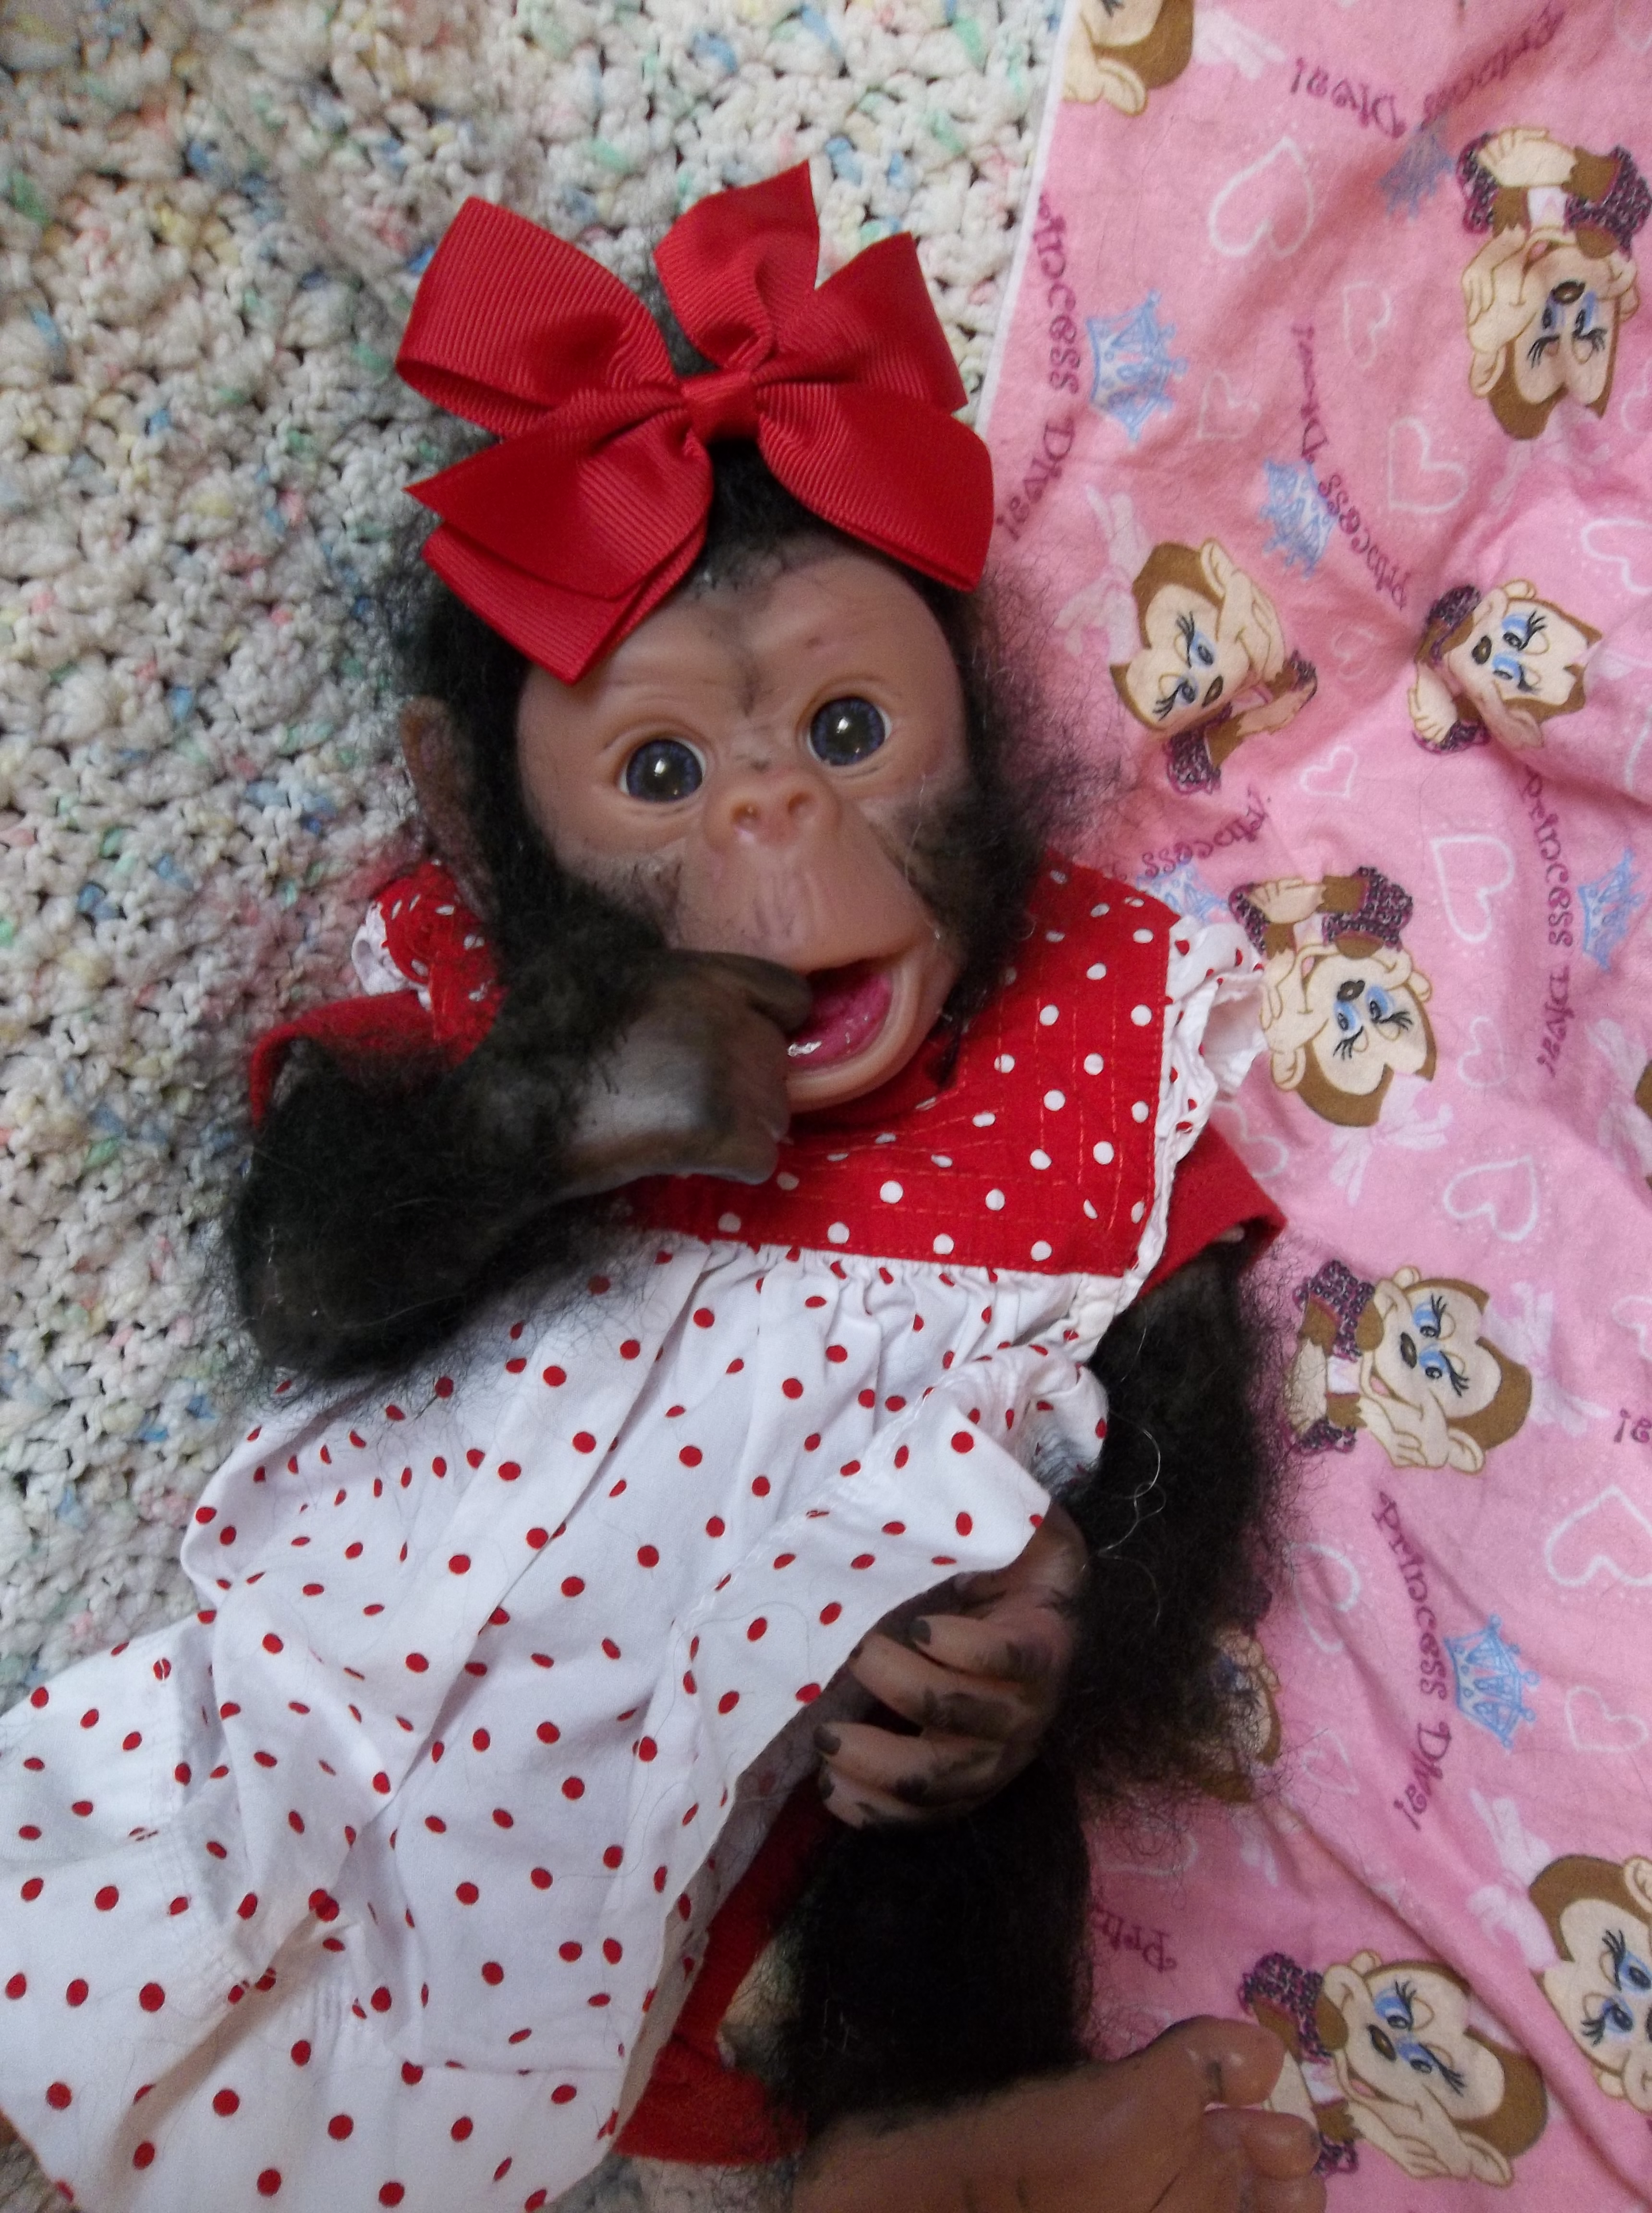 reborn monkey dolls for sale